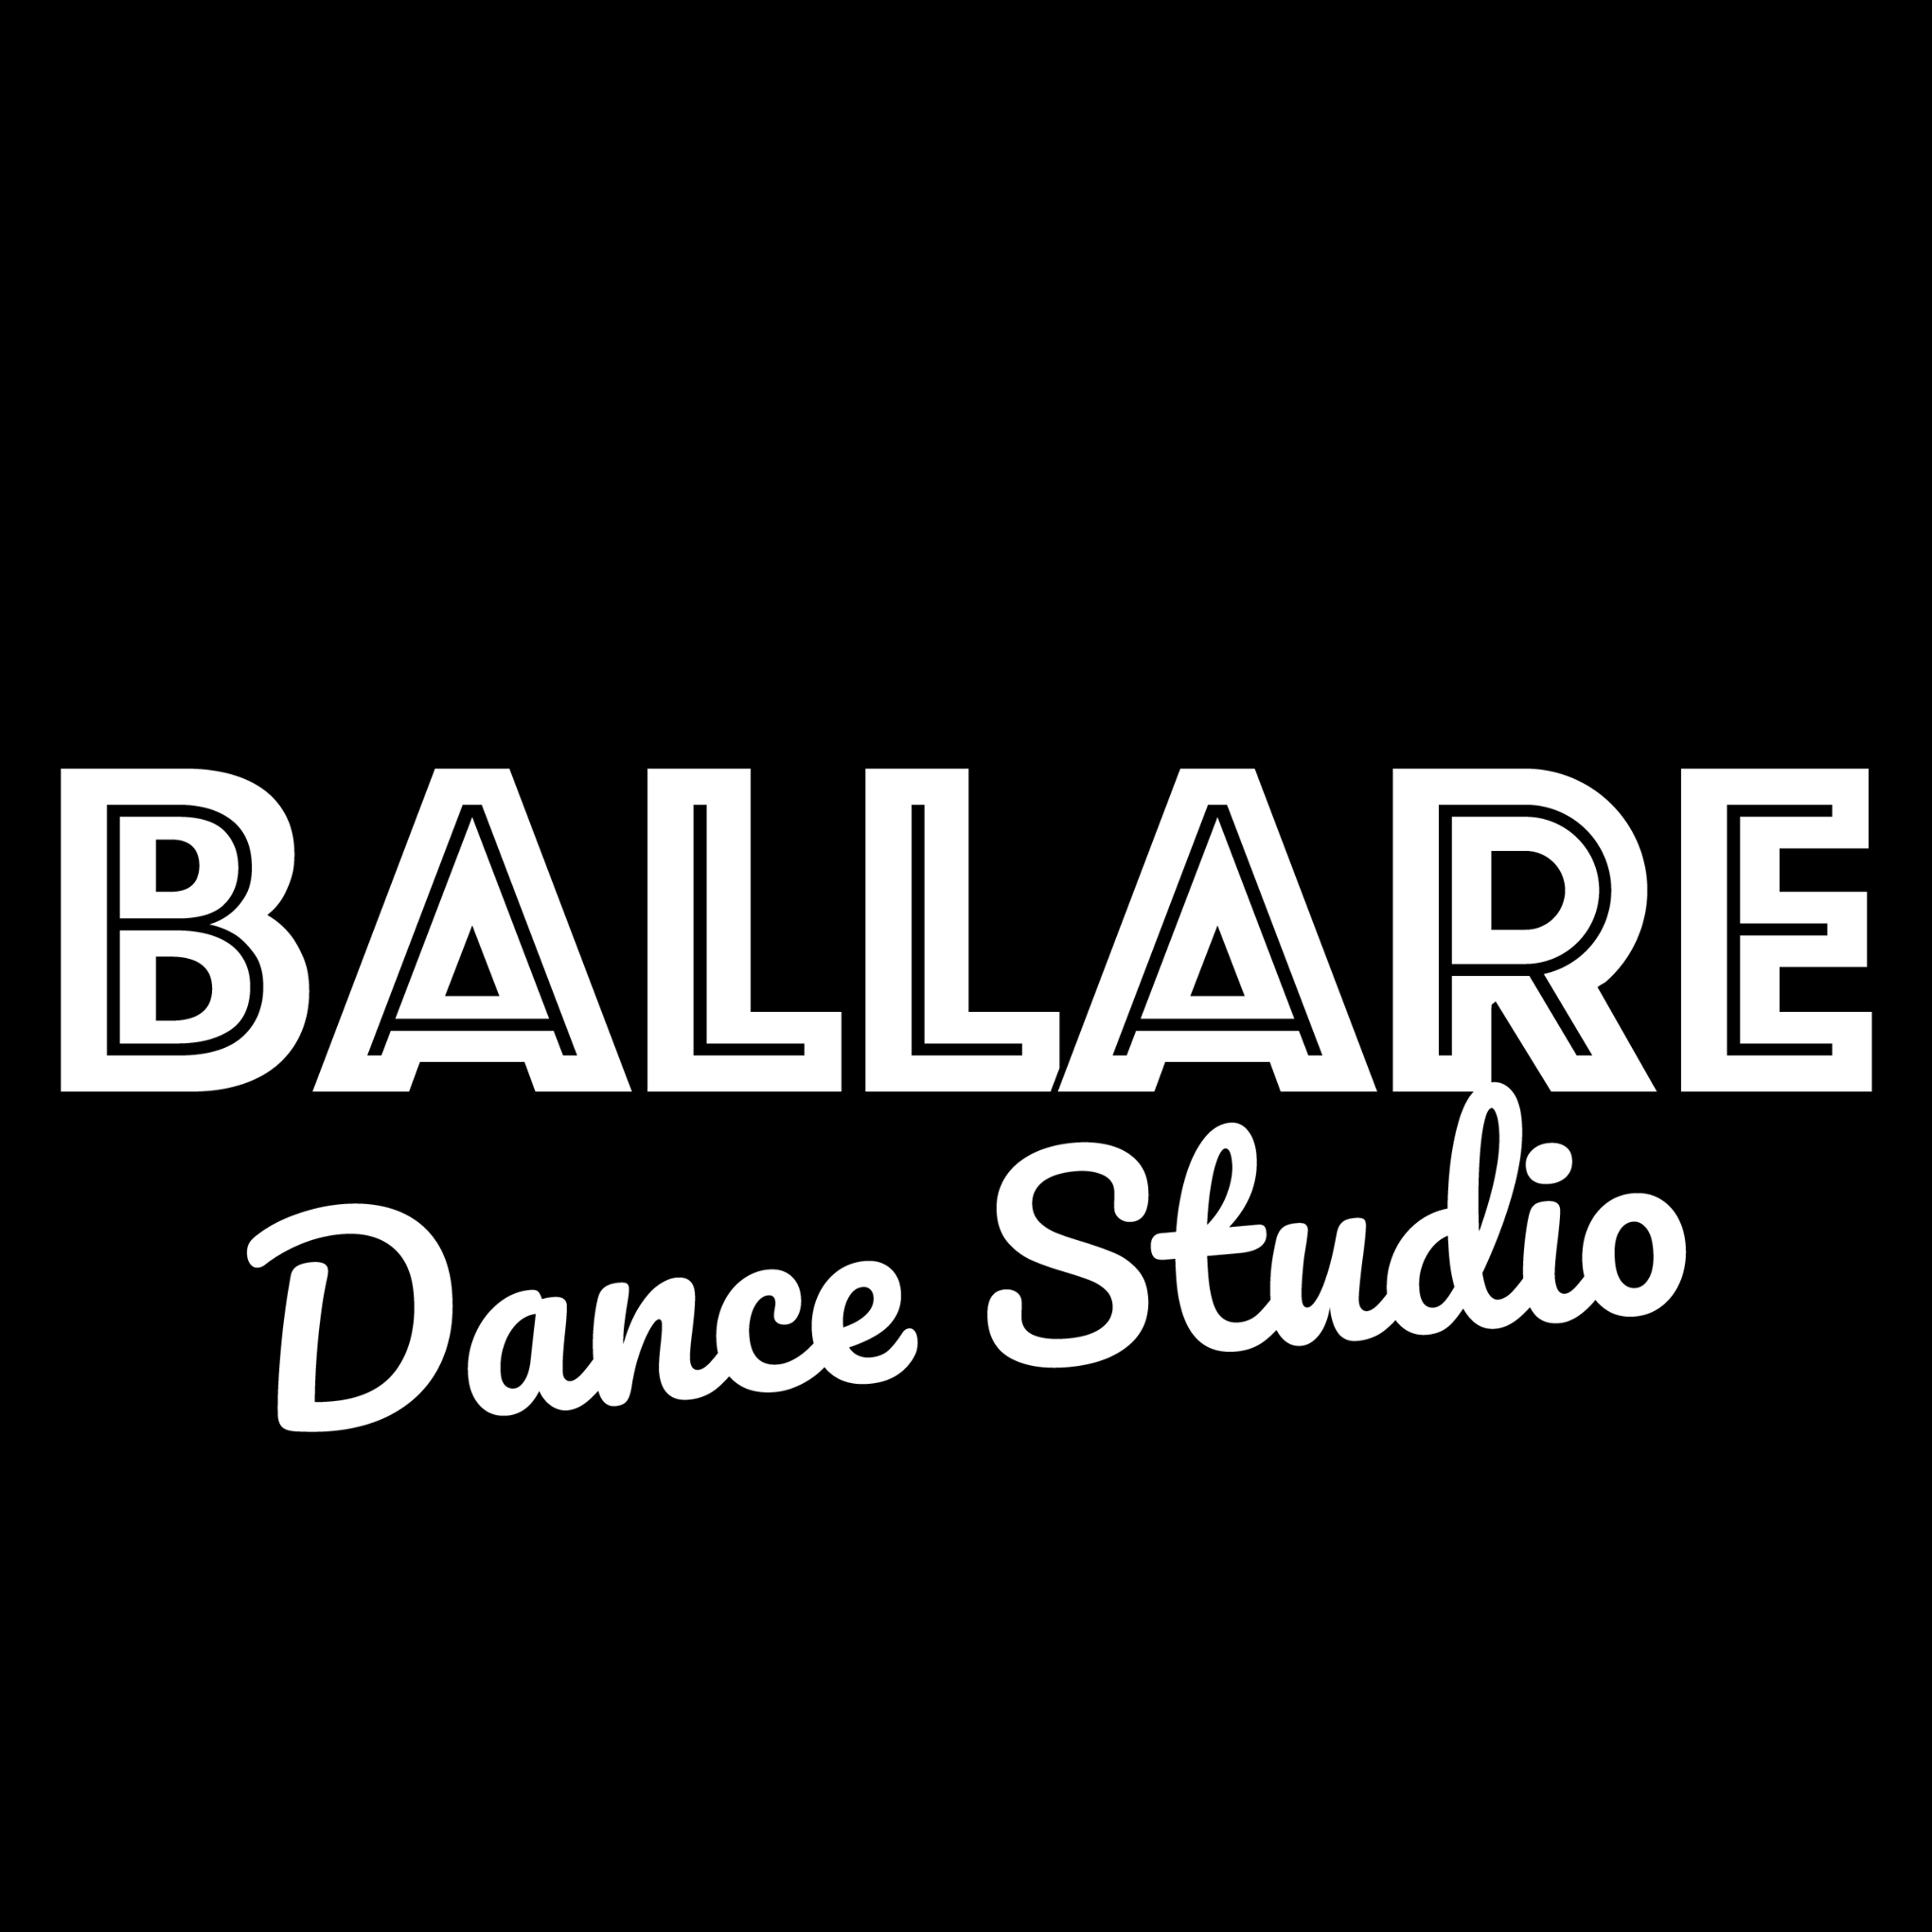 BALLARE DANCE STUDIO logo